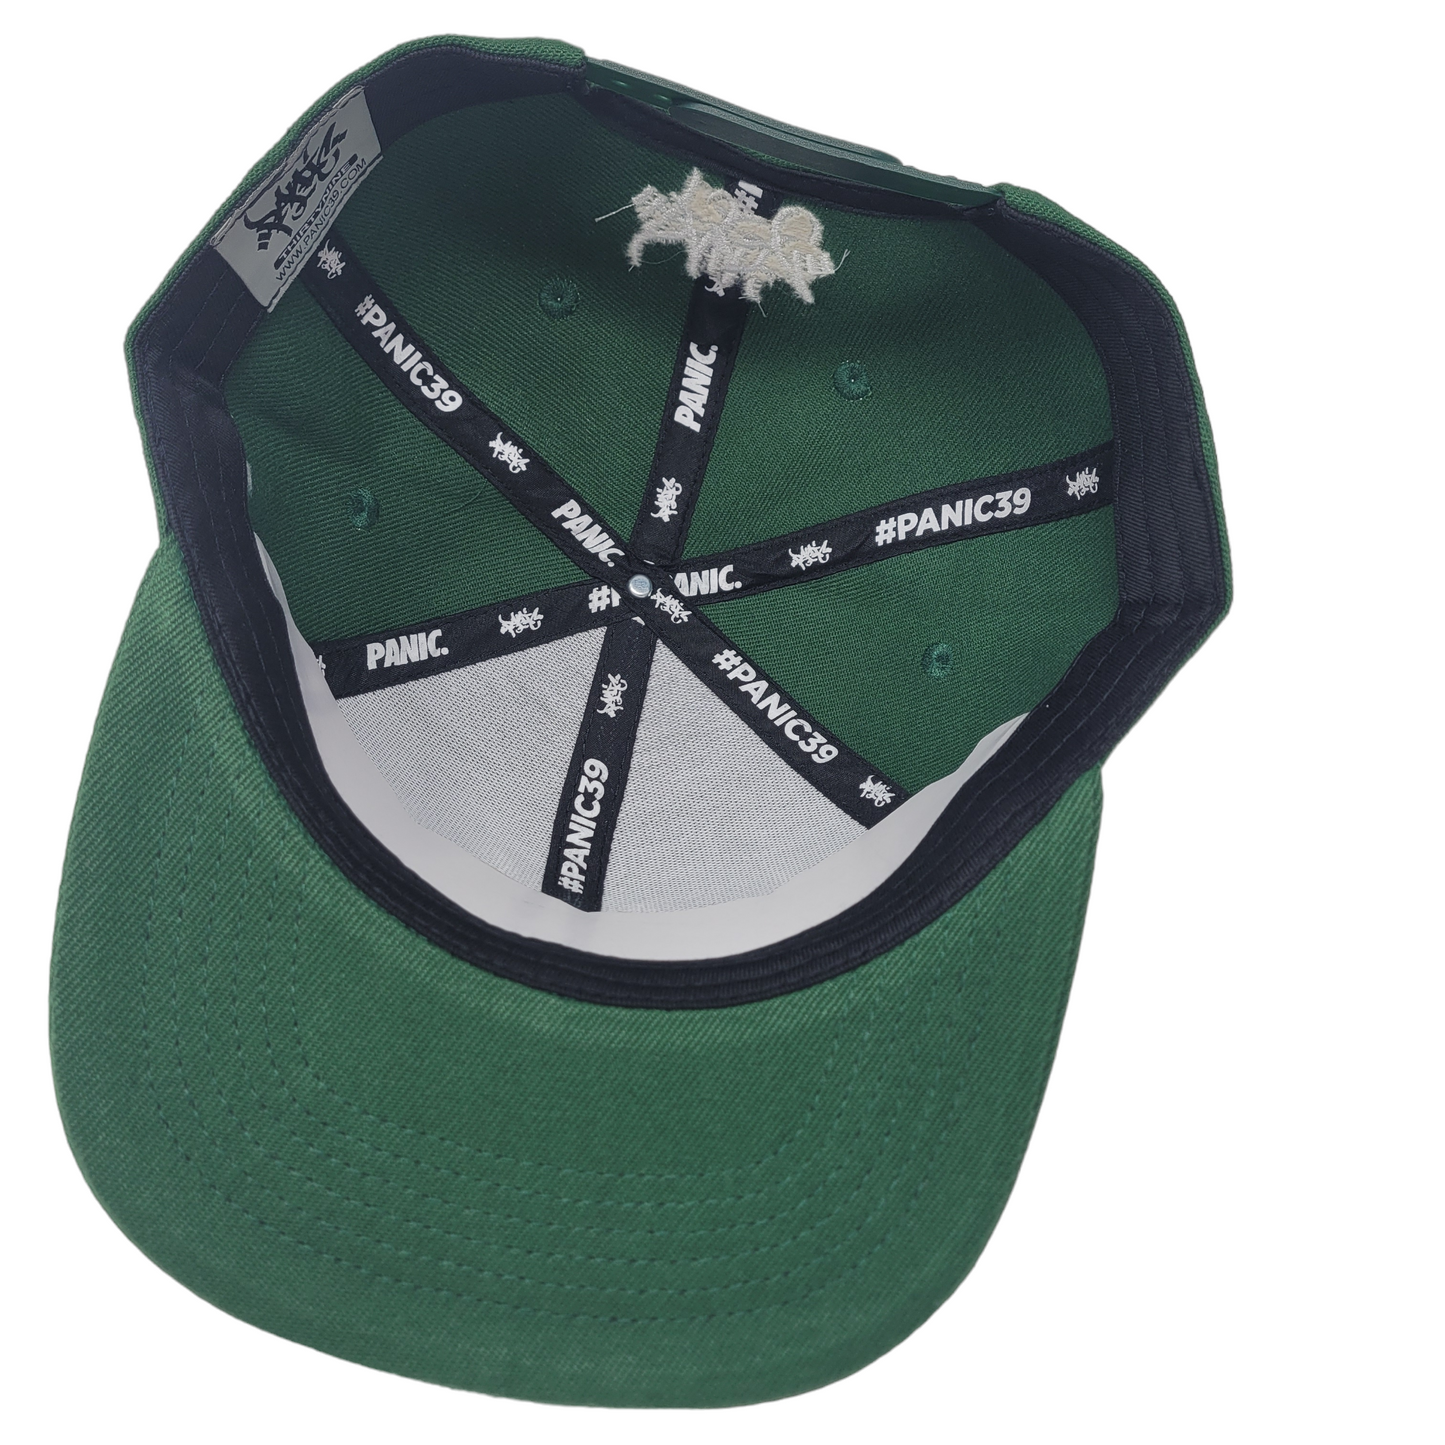 THE 3D Kelly Green TAG LOGO SNAPBACK BASEBALL HAT